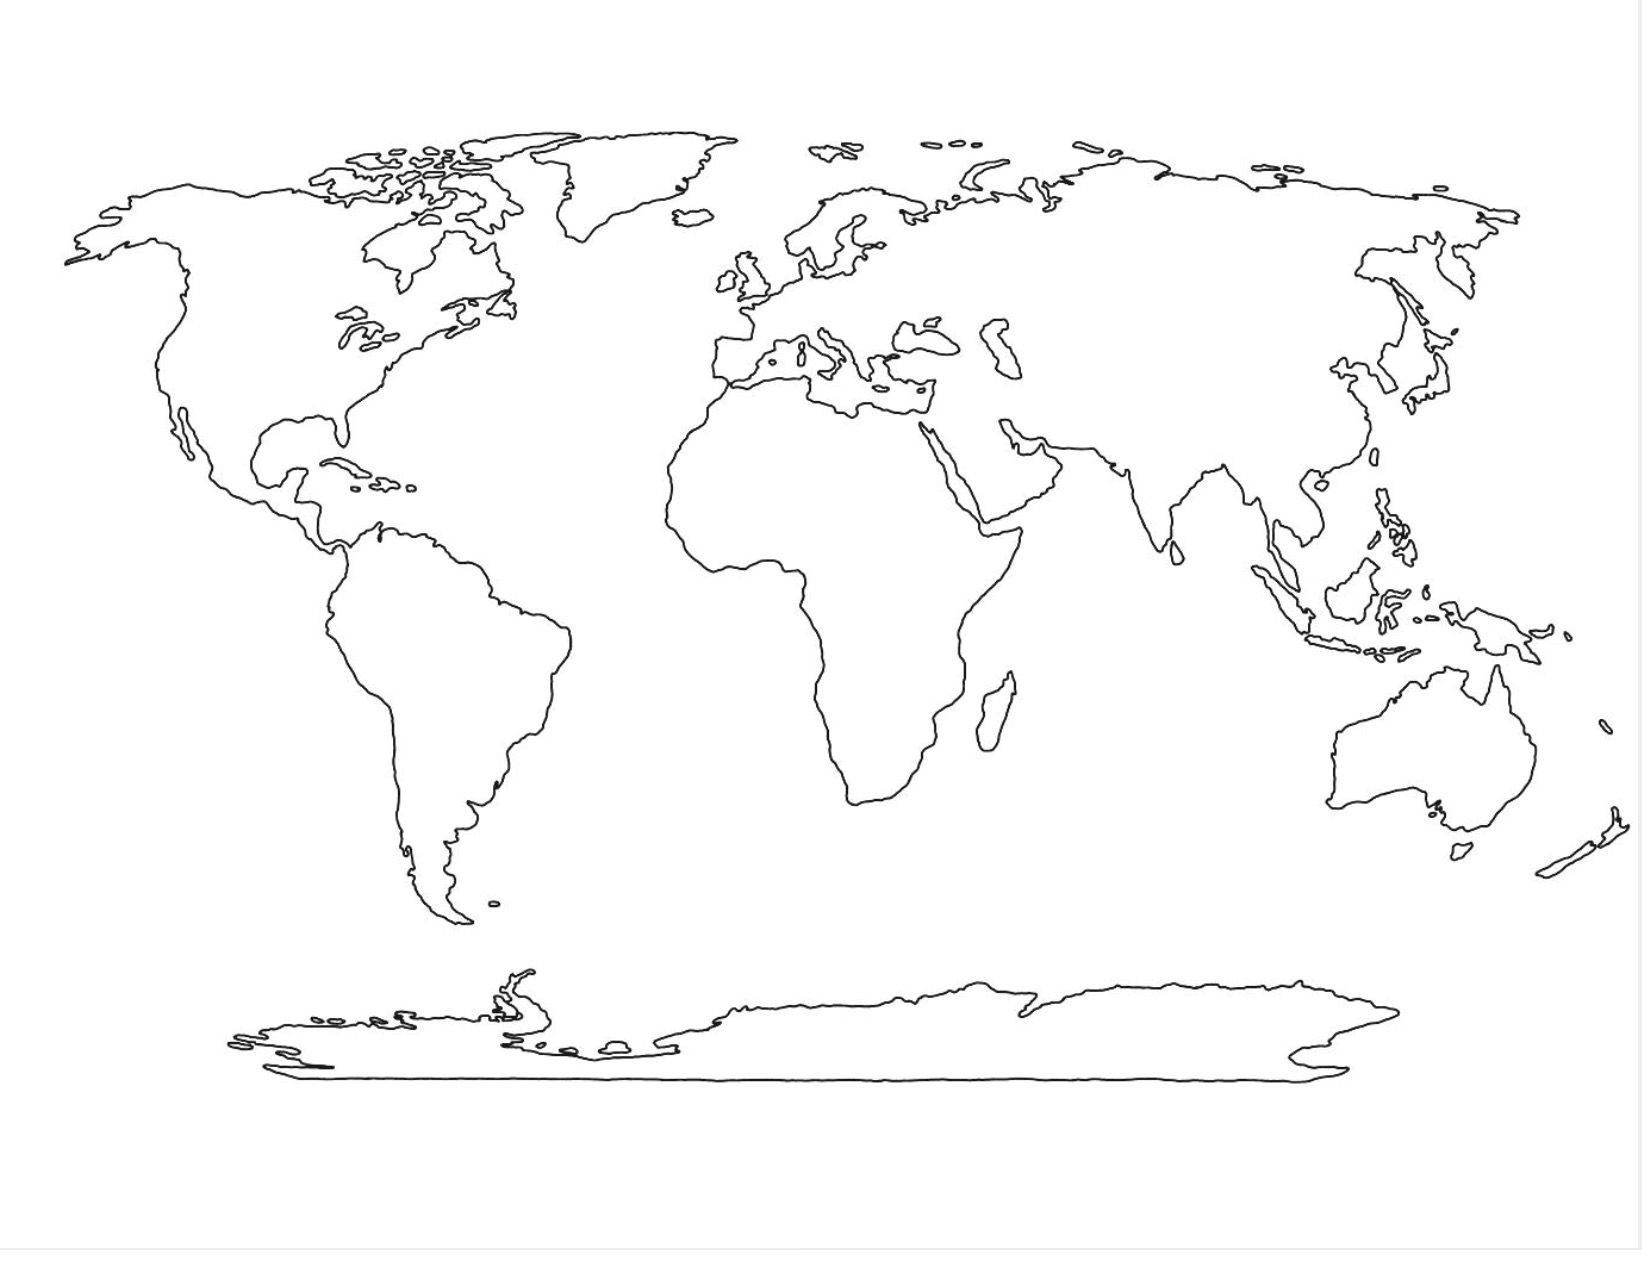 World map black.